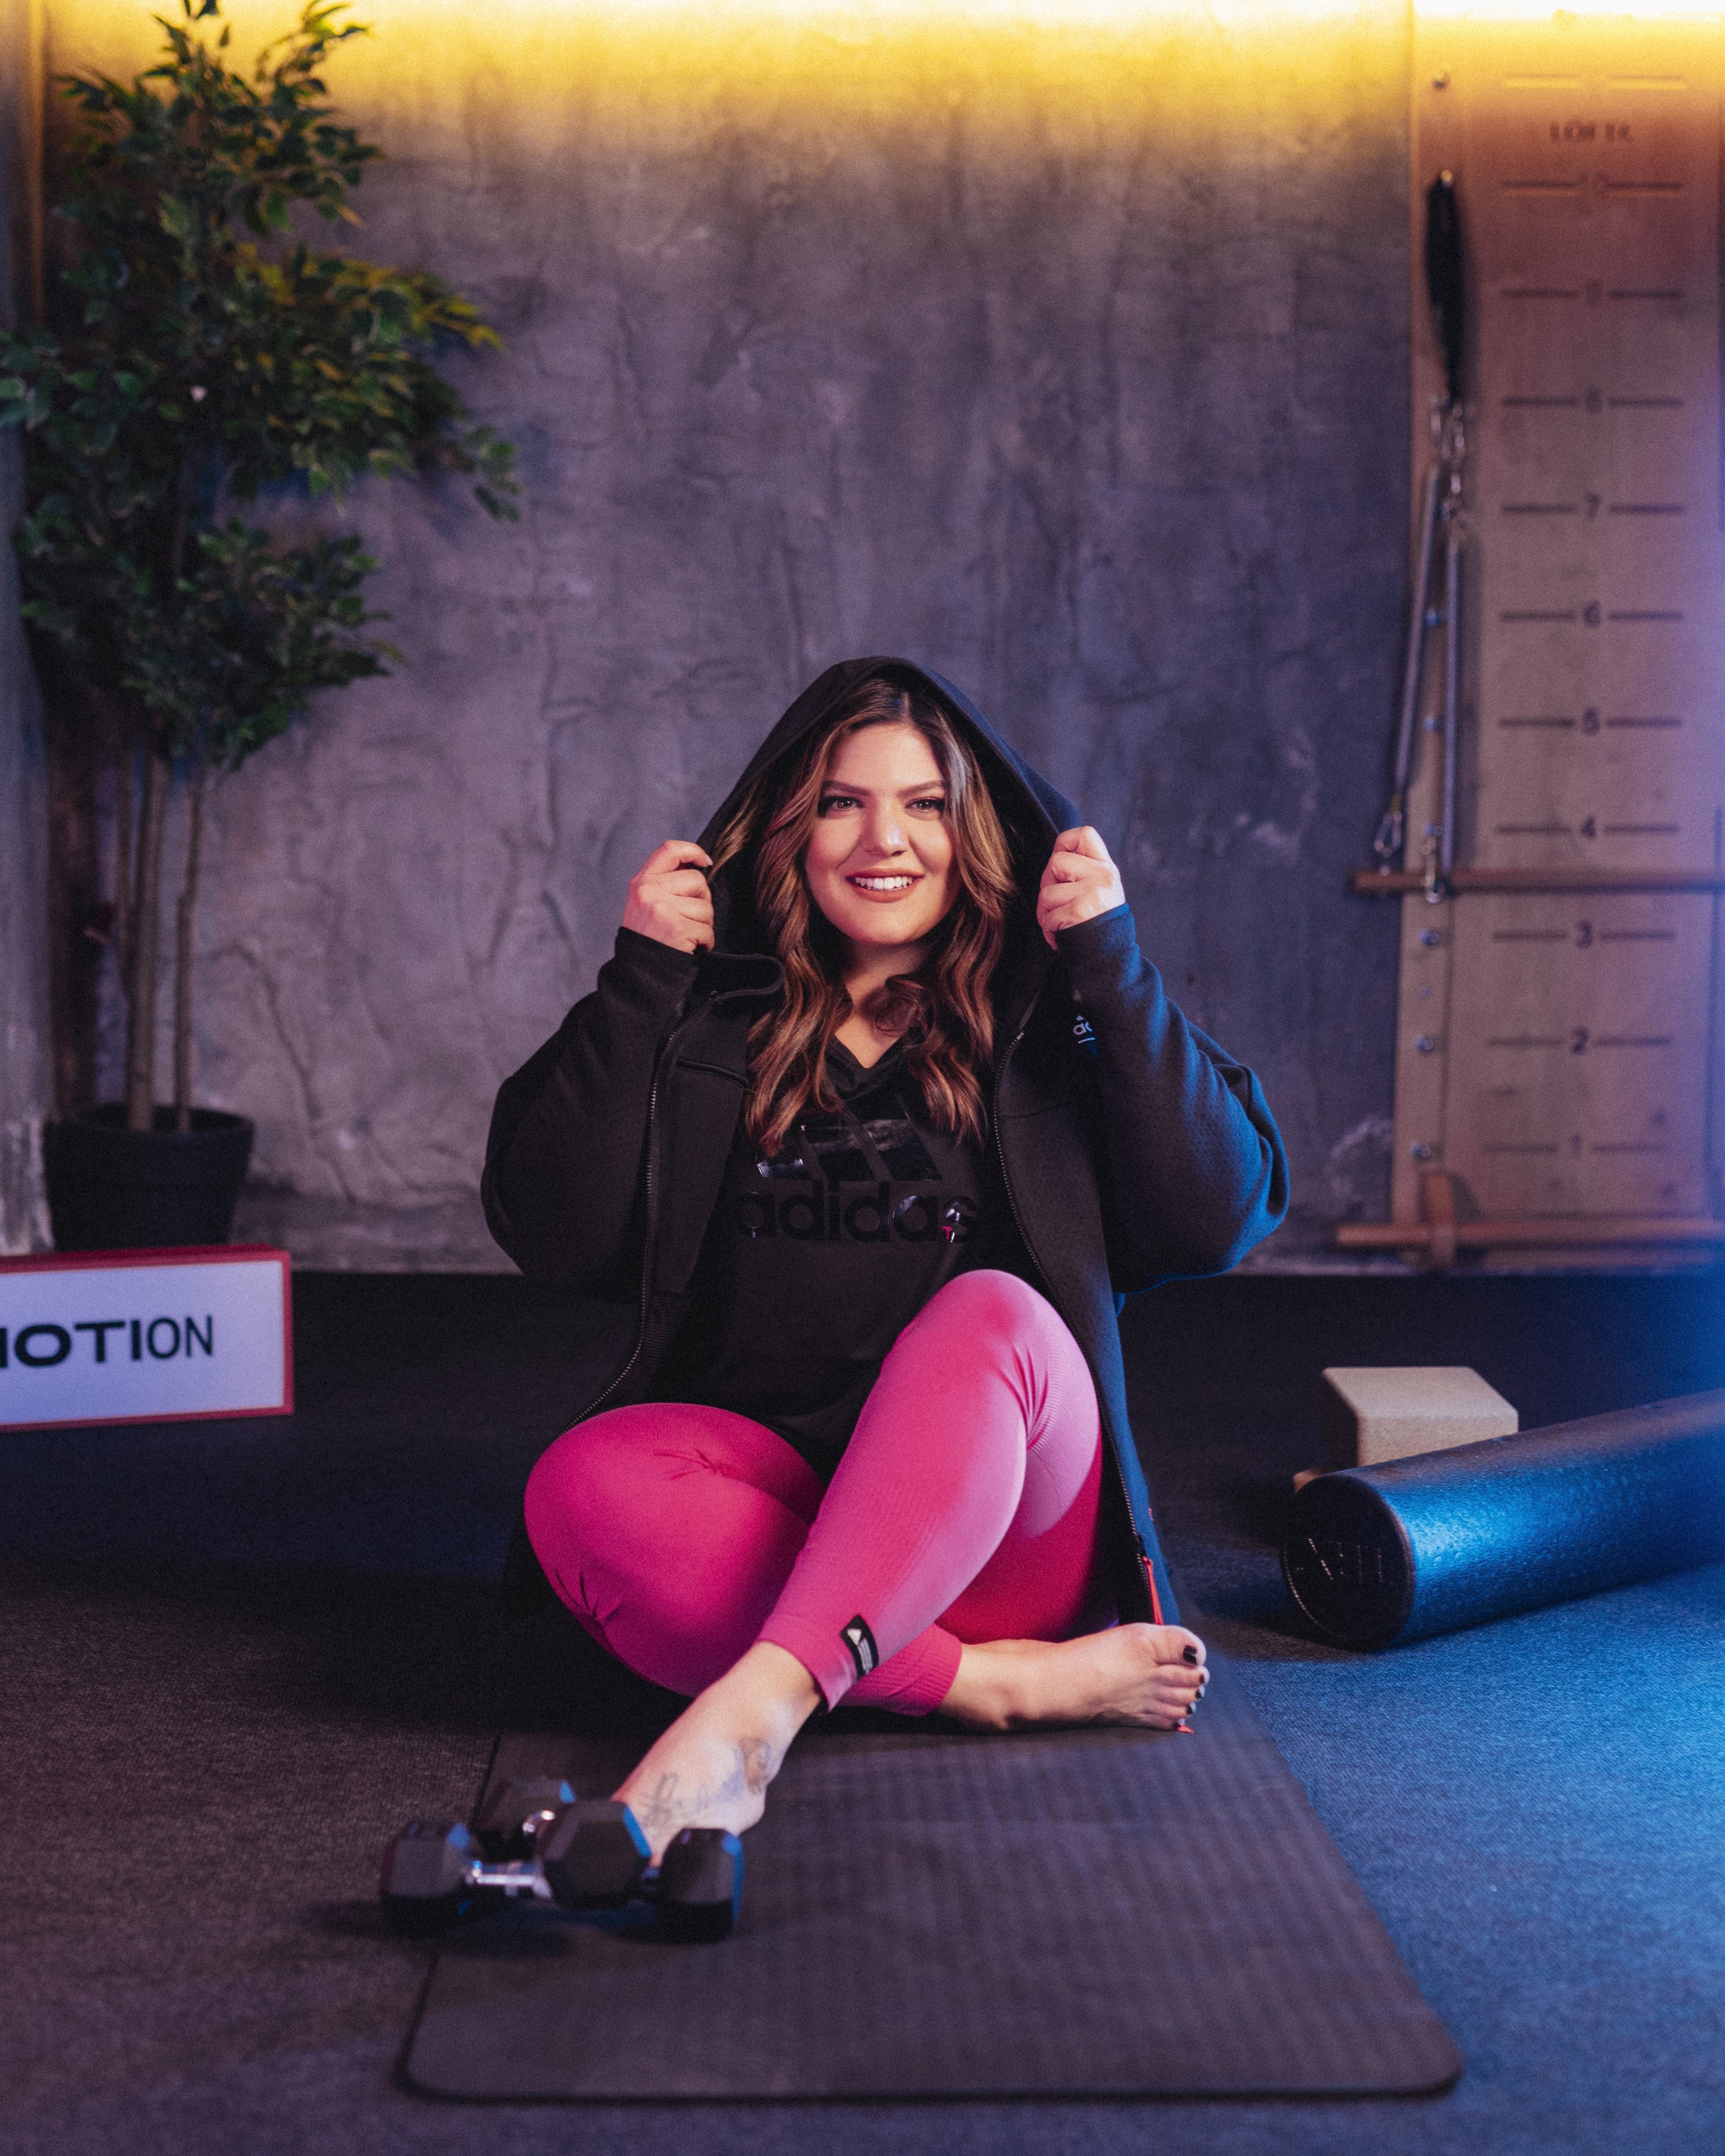 Watch Us Move: Το νέο project της adidas αφορά όλες τις σύγχρονες γυναίκες